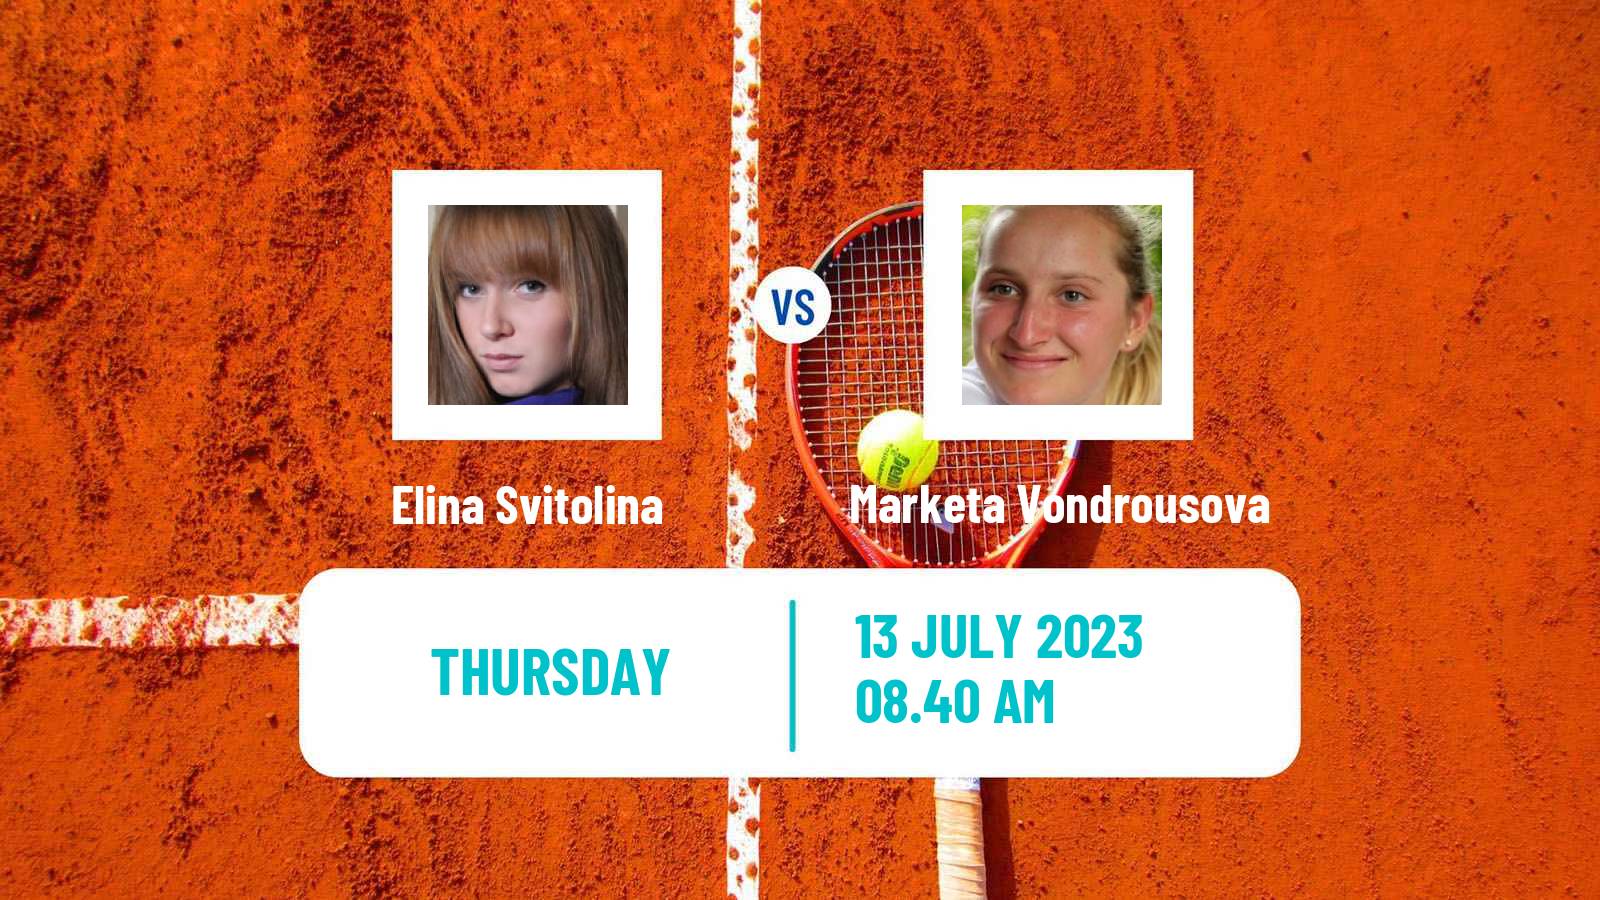 Tennis WTA Wimbledon Elina Svitolina - Marketa Vondrousova